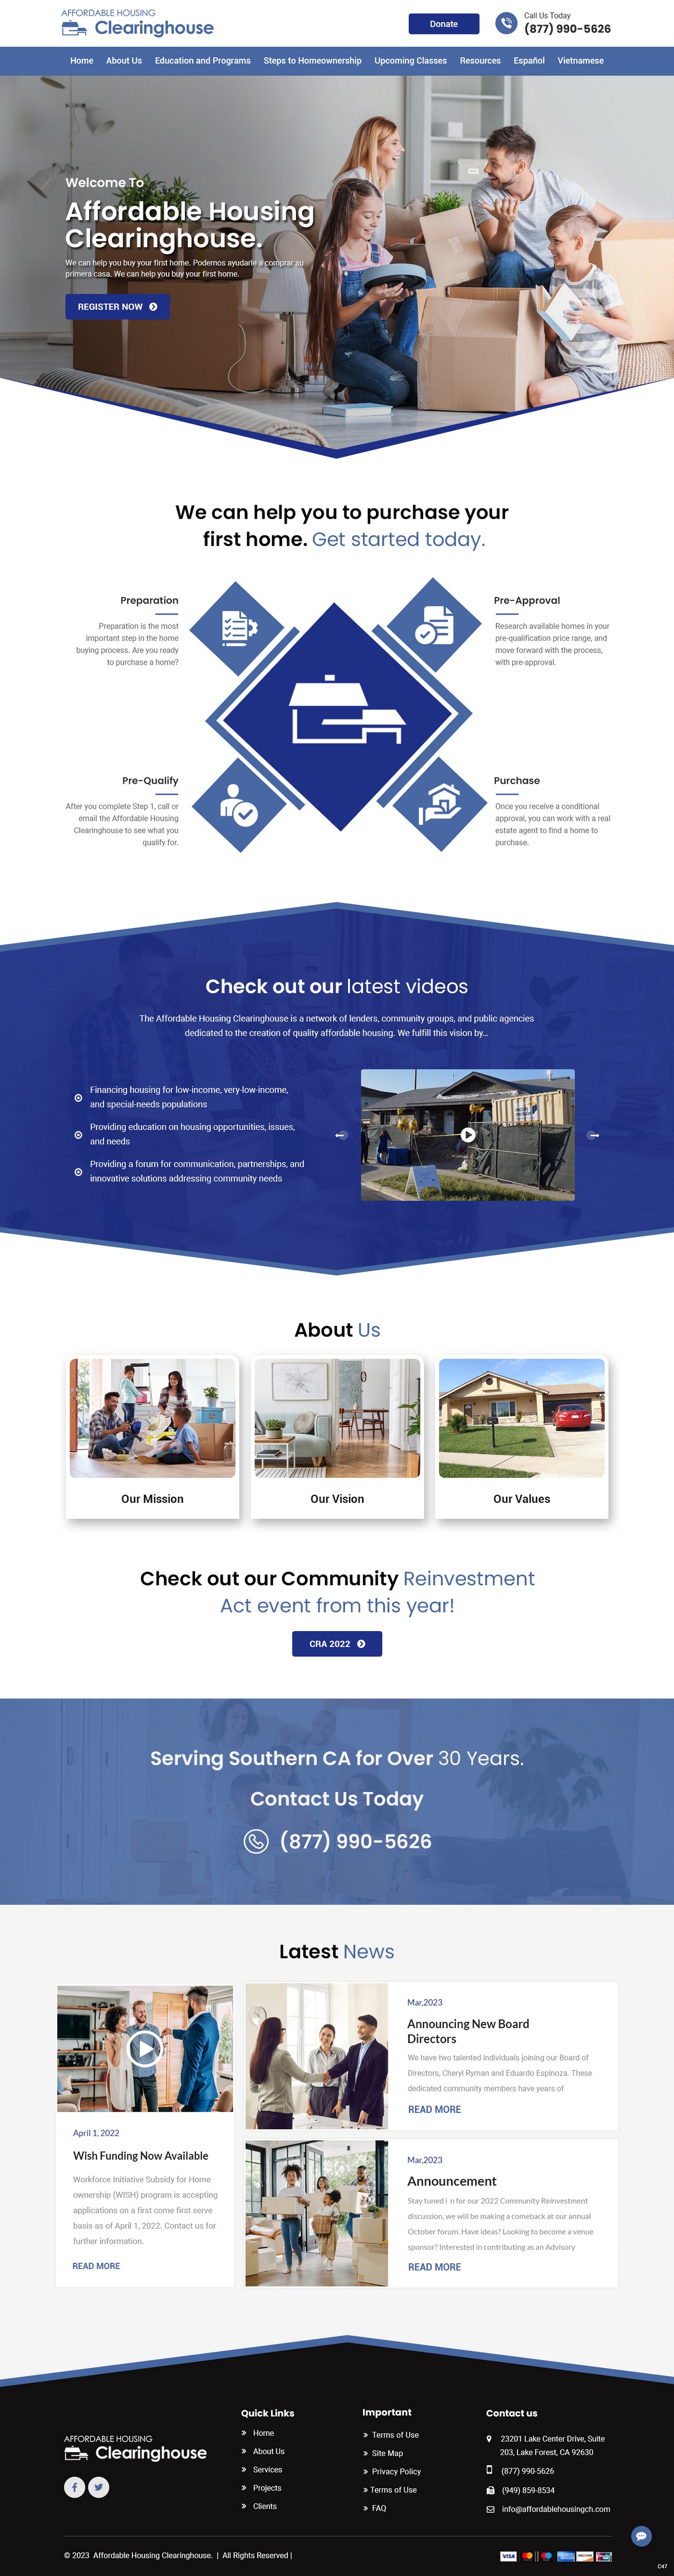 Association website design example